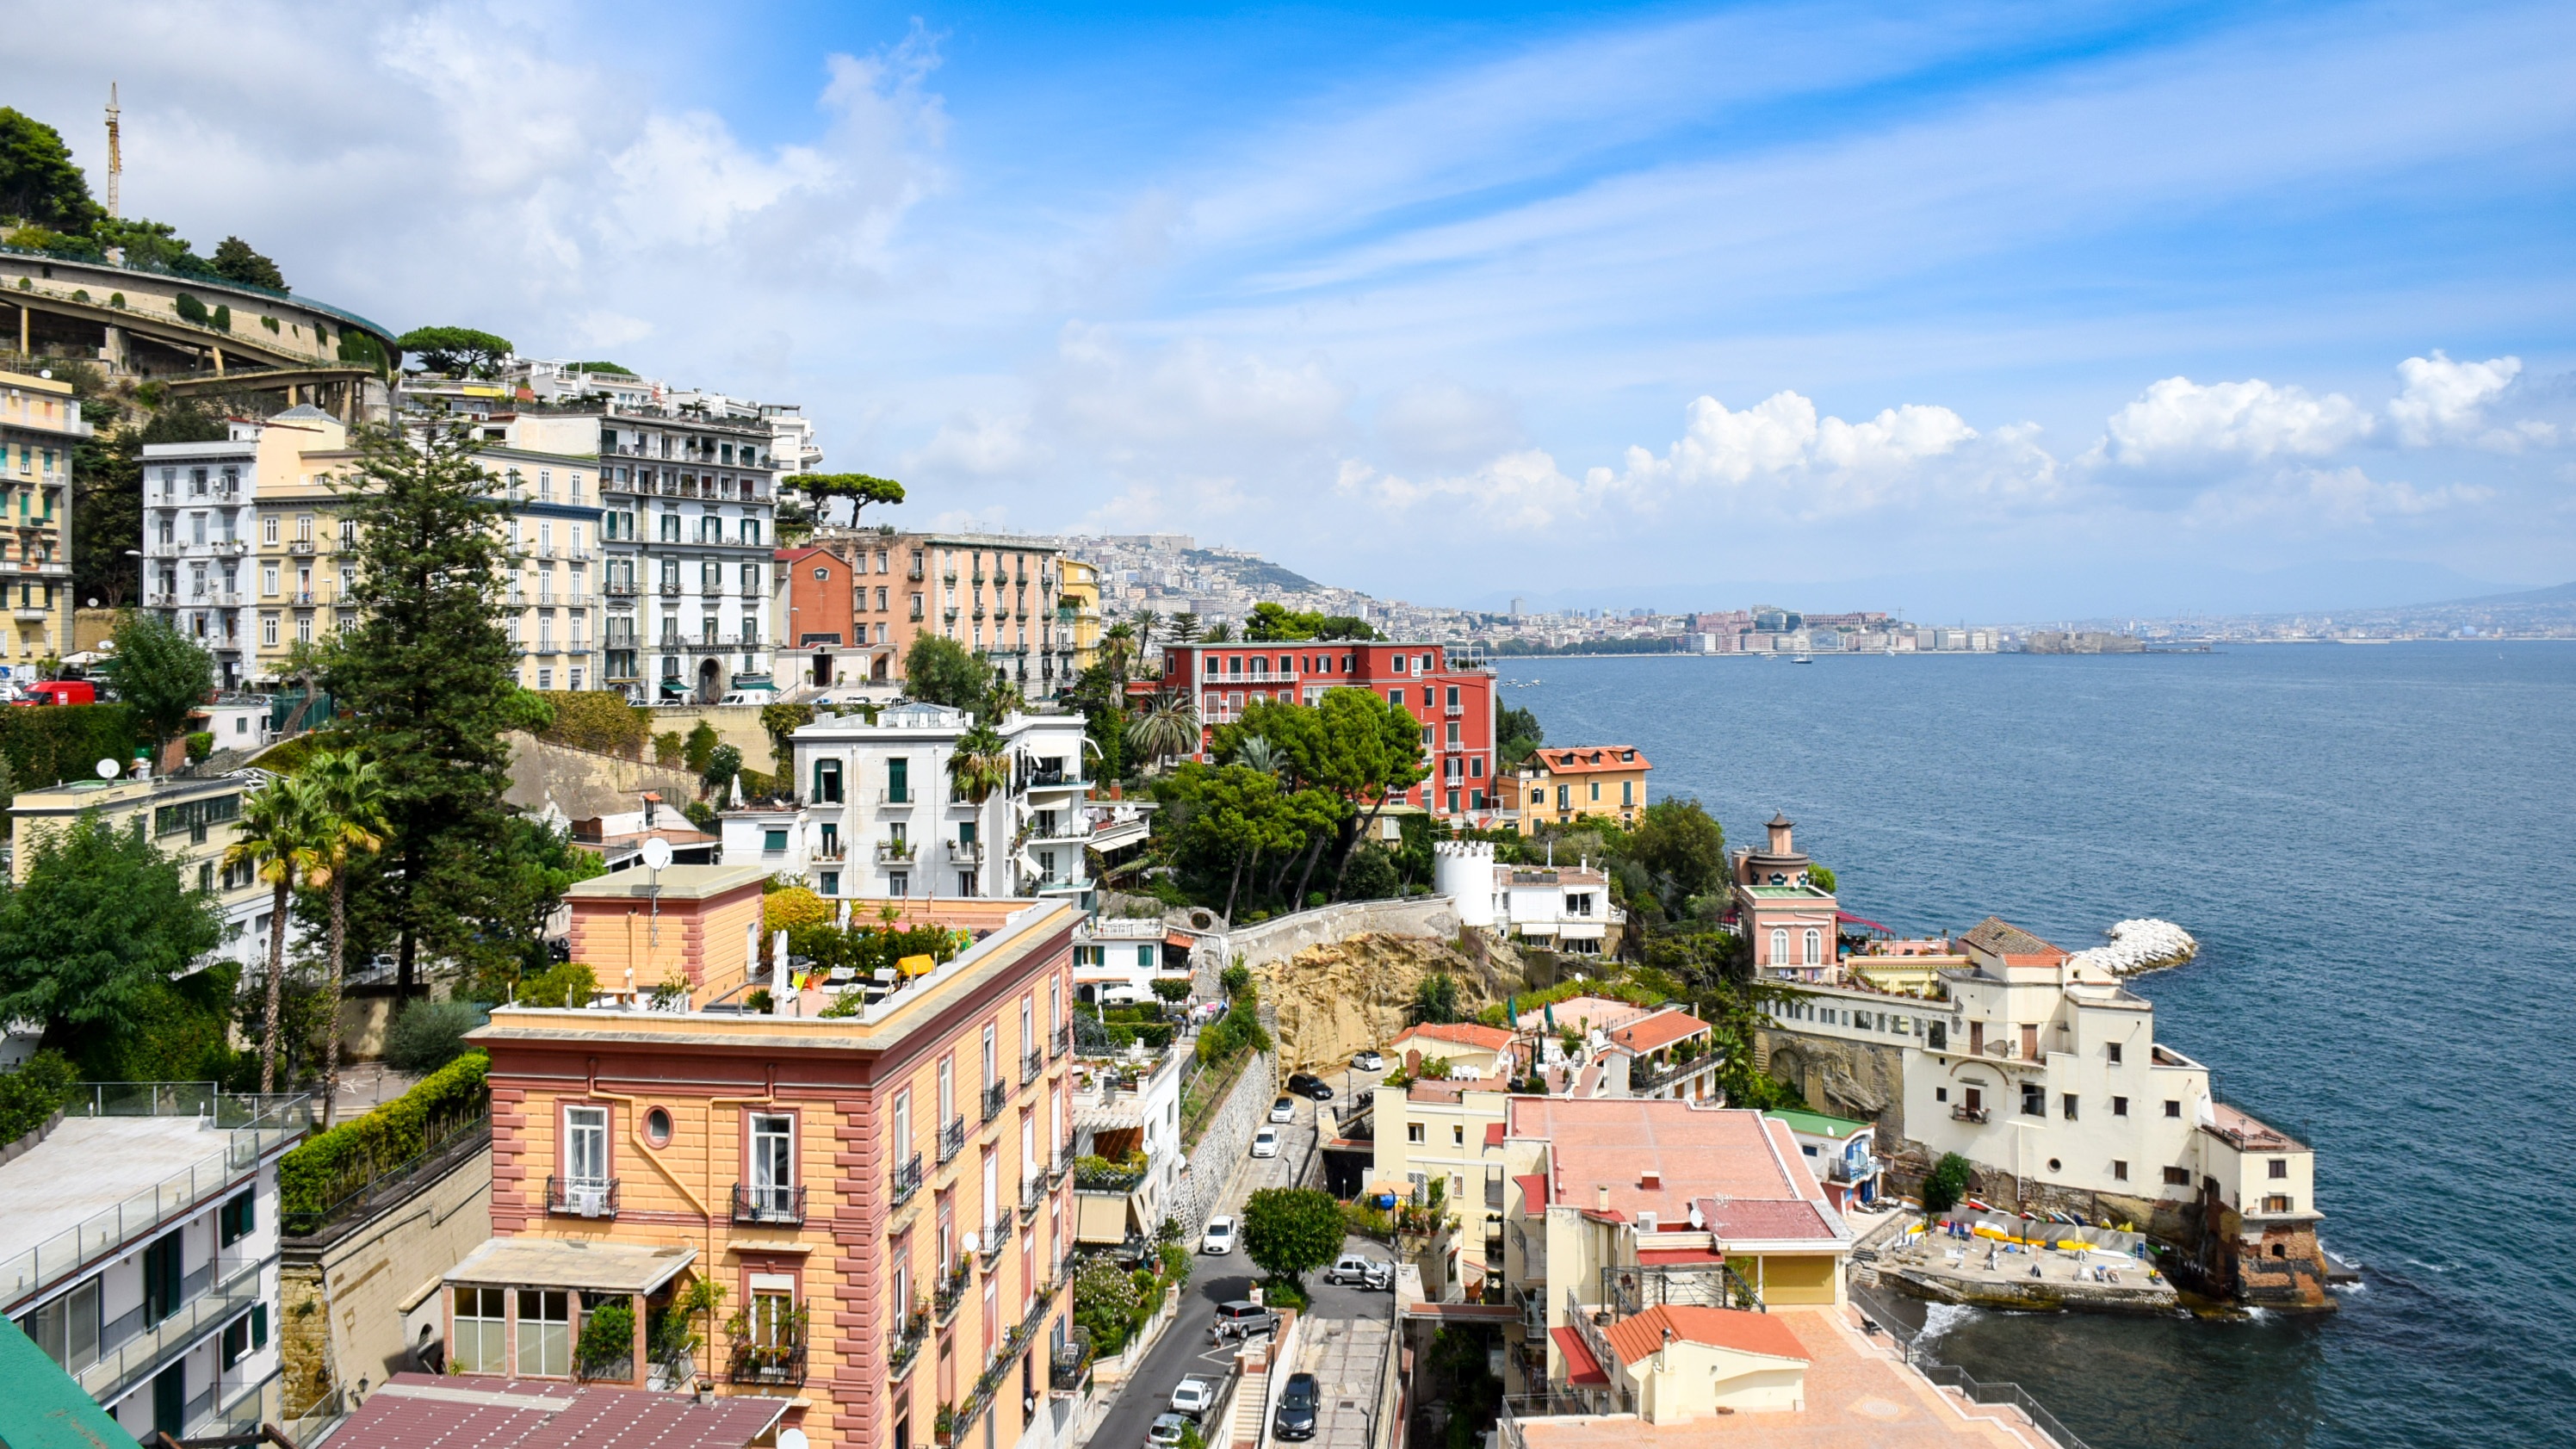 City of Naples seaside view